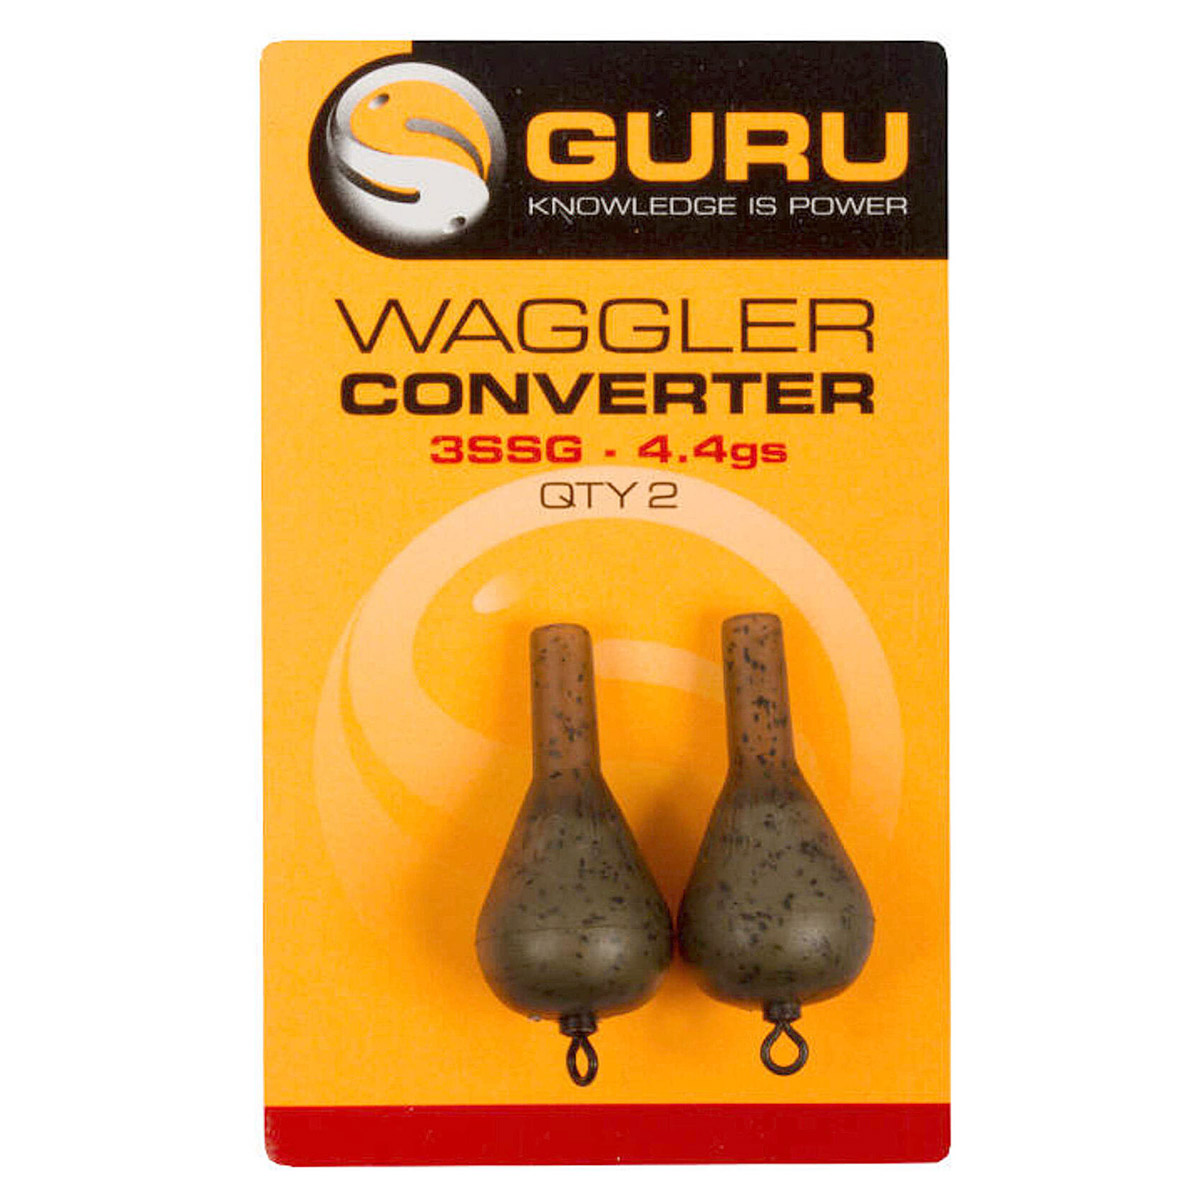 Guru Waggler Convertor